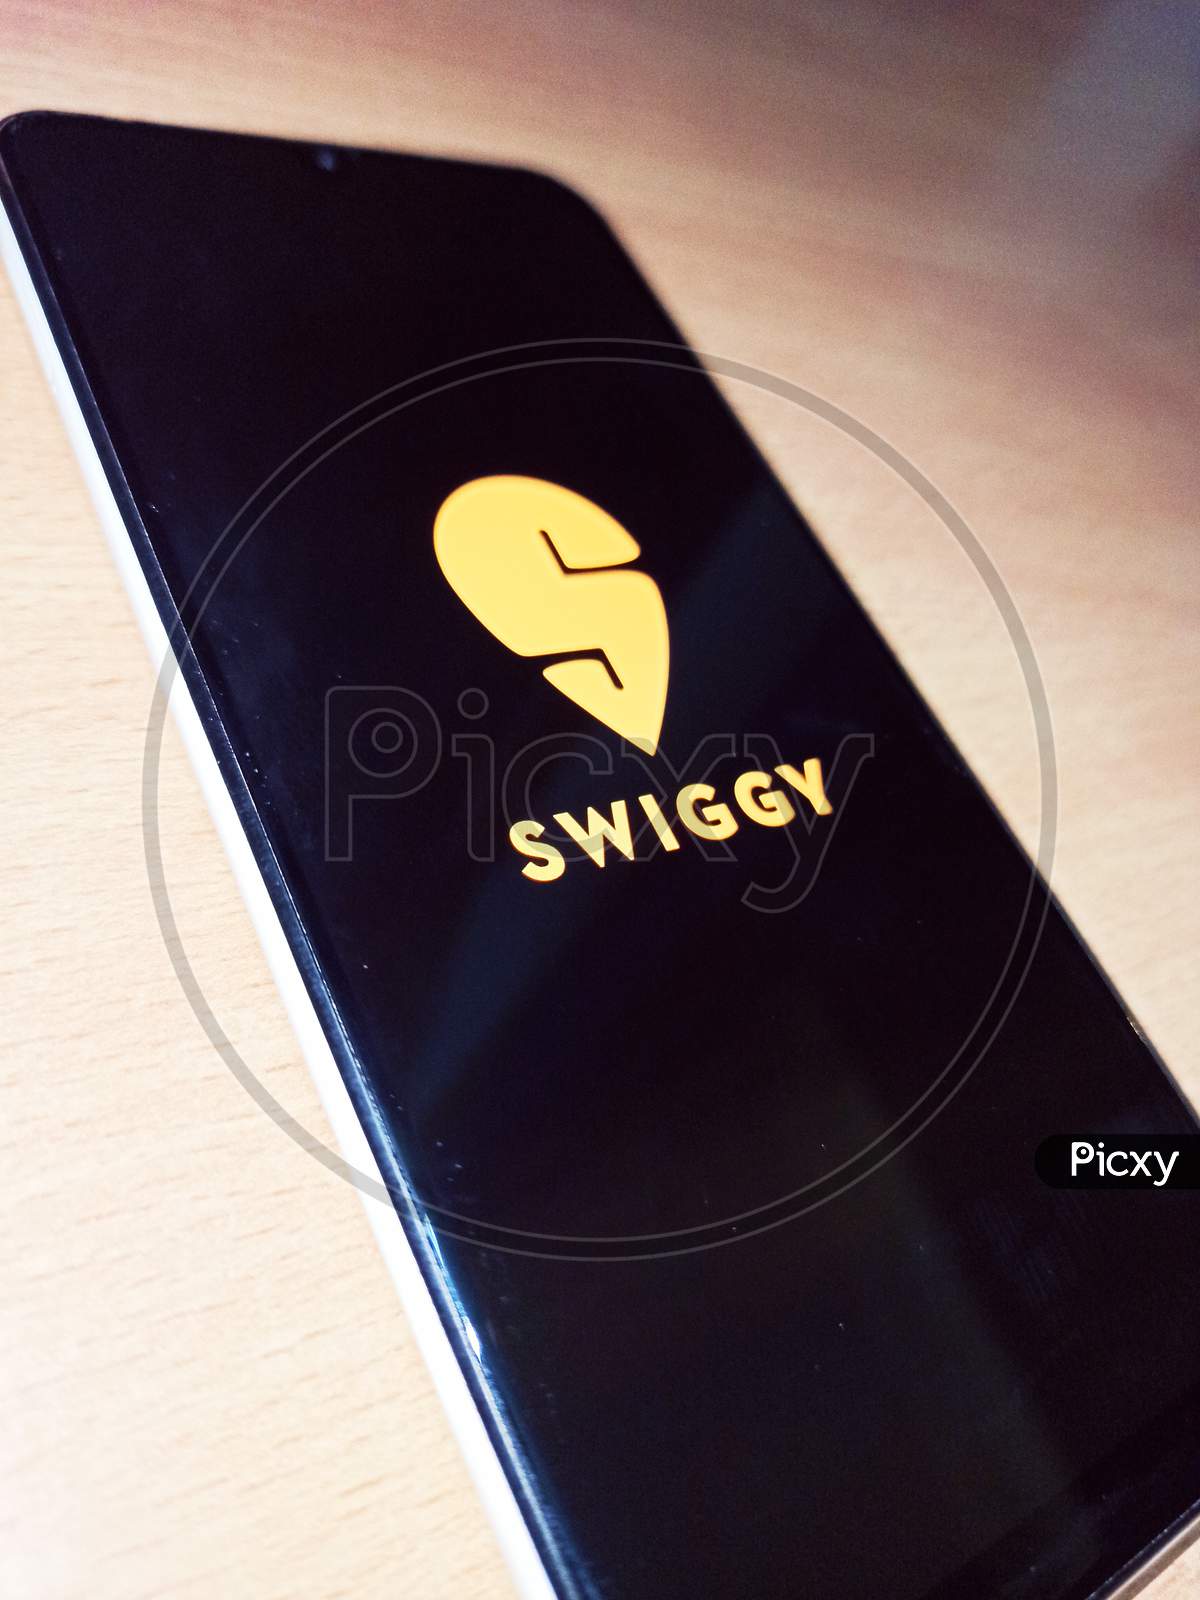 Swiggy logo on Mobile phone